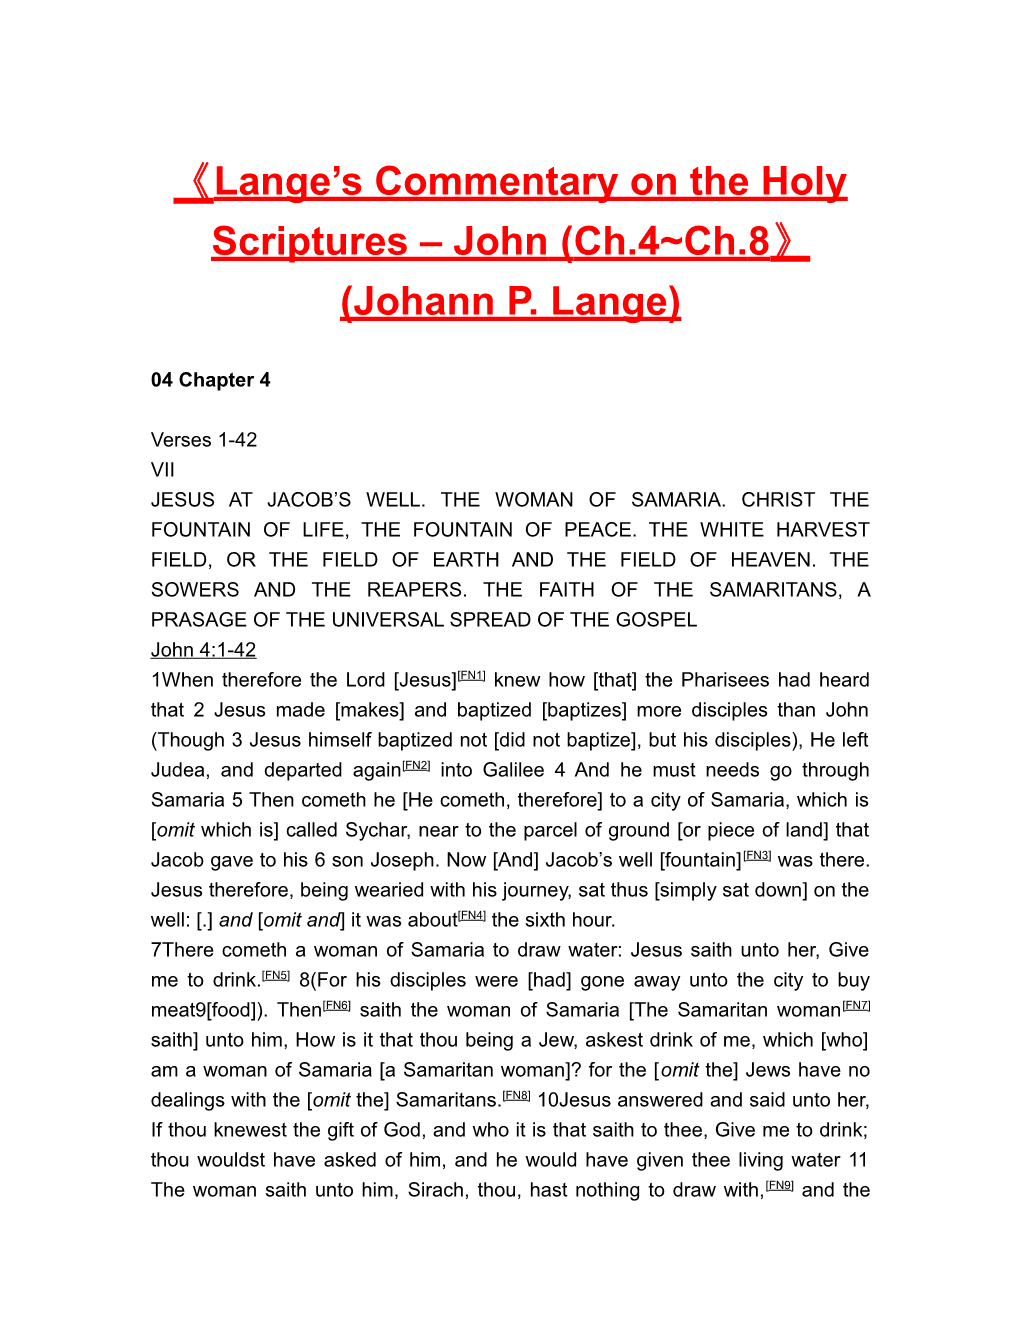 Lange S Commentary on the Holy Scriptures John (Ch.4 Ch.8 (Johann P. Lange)